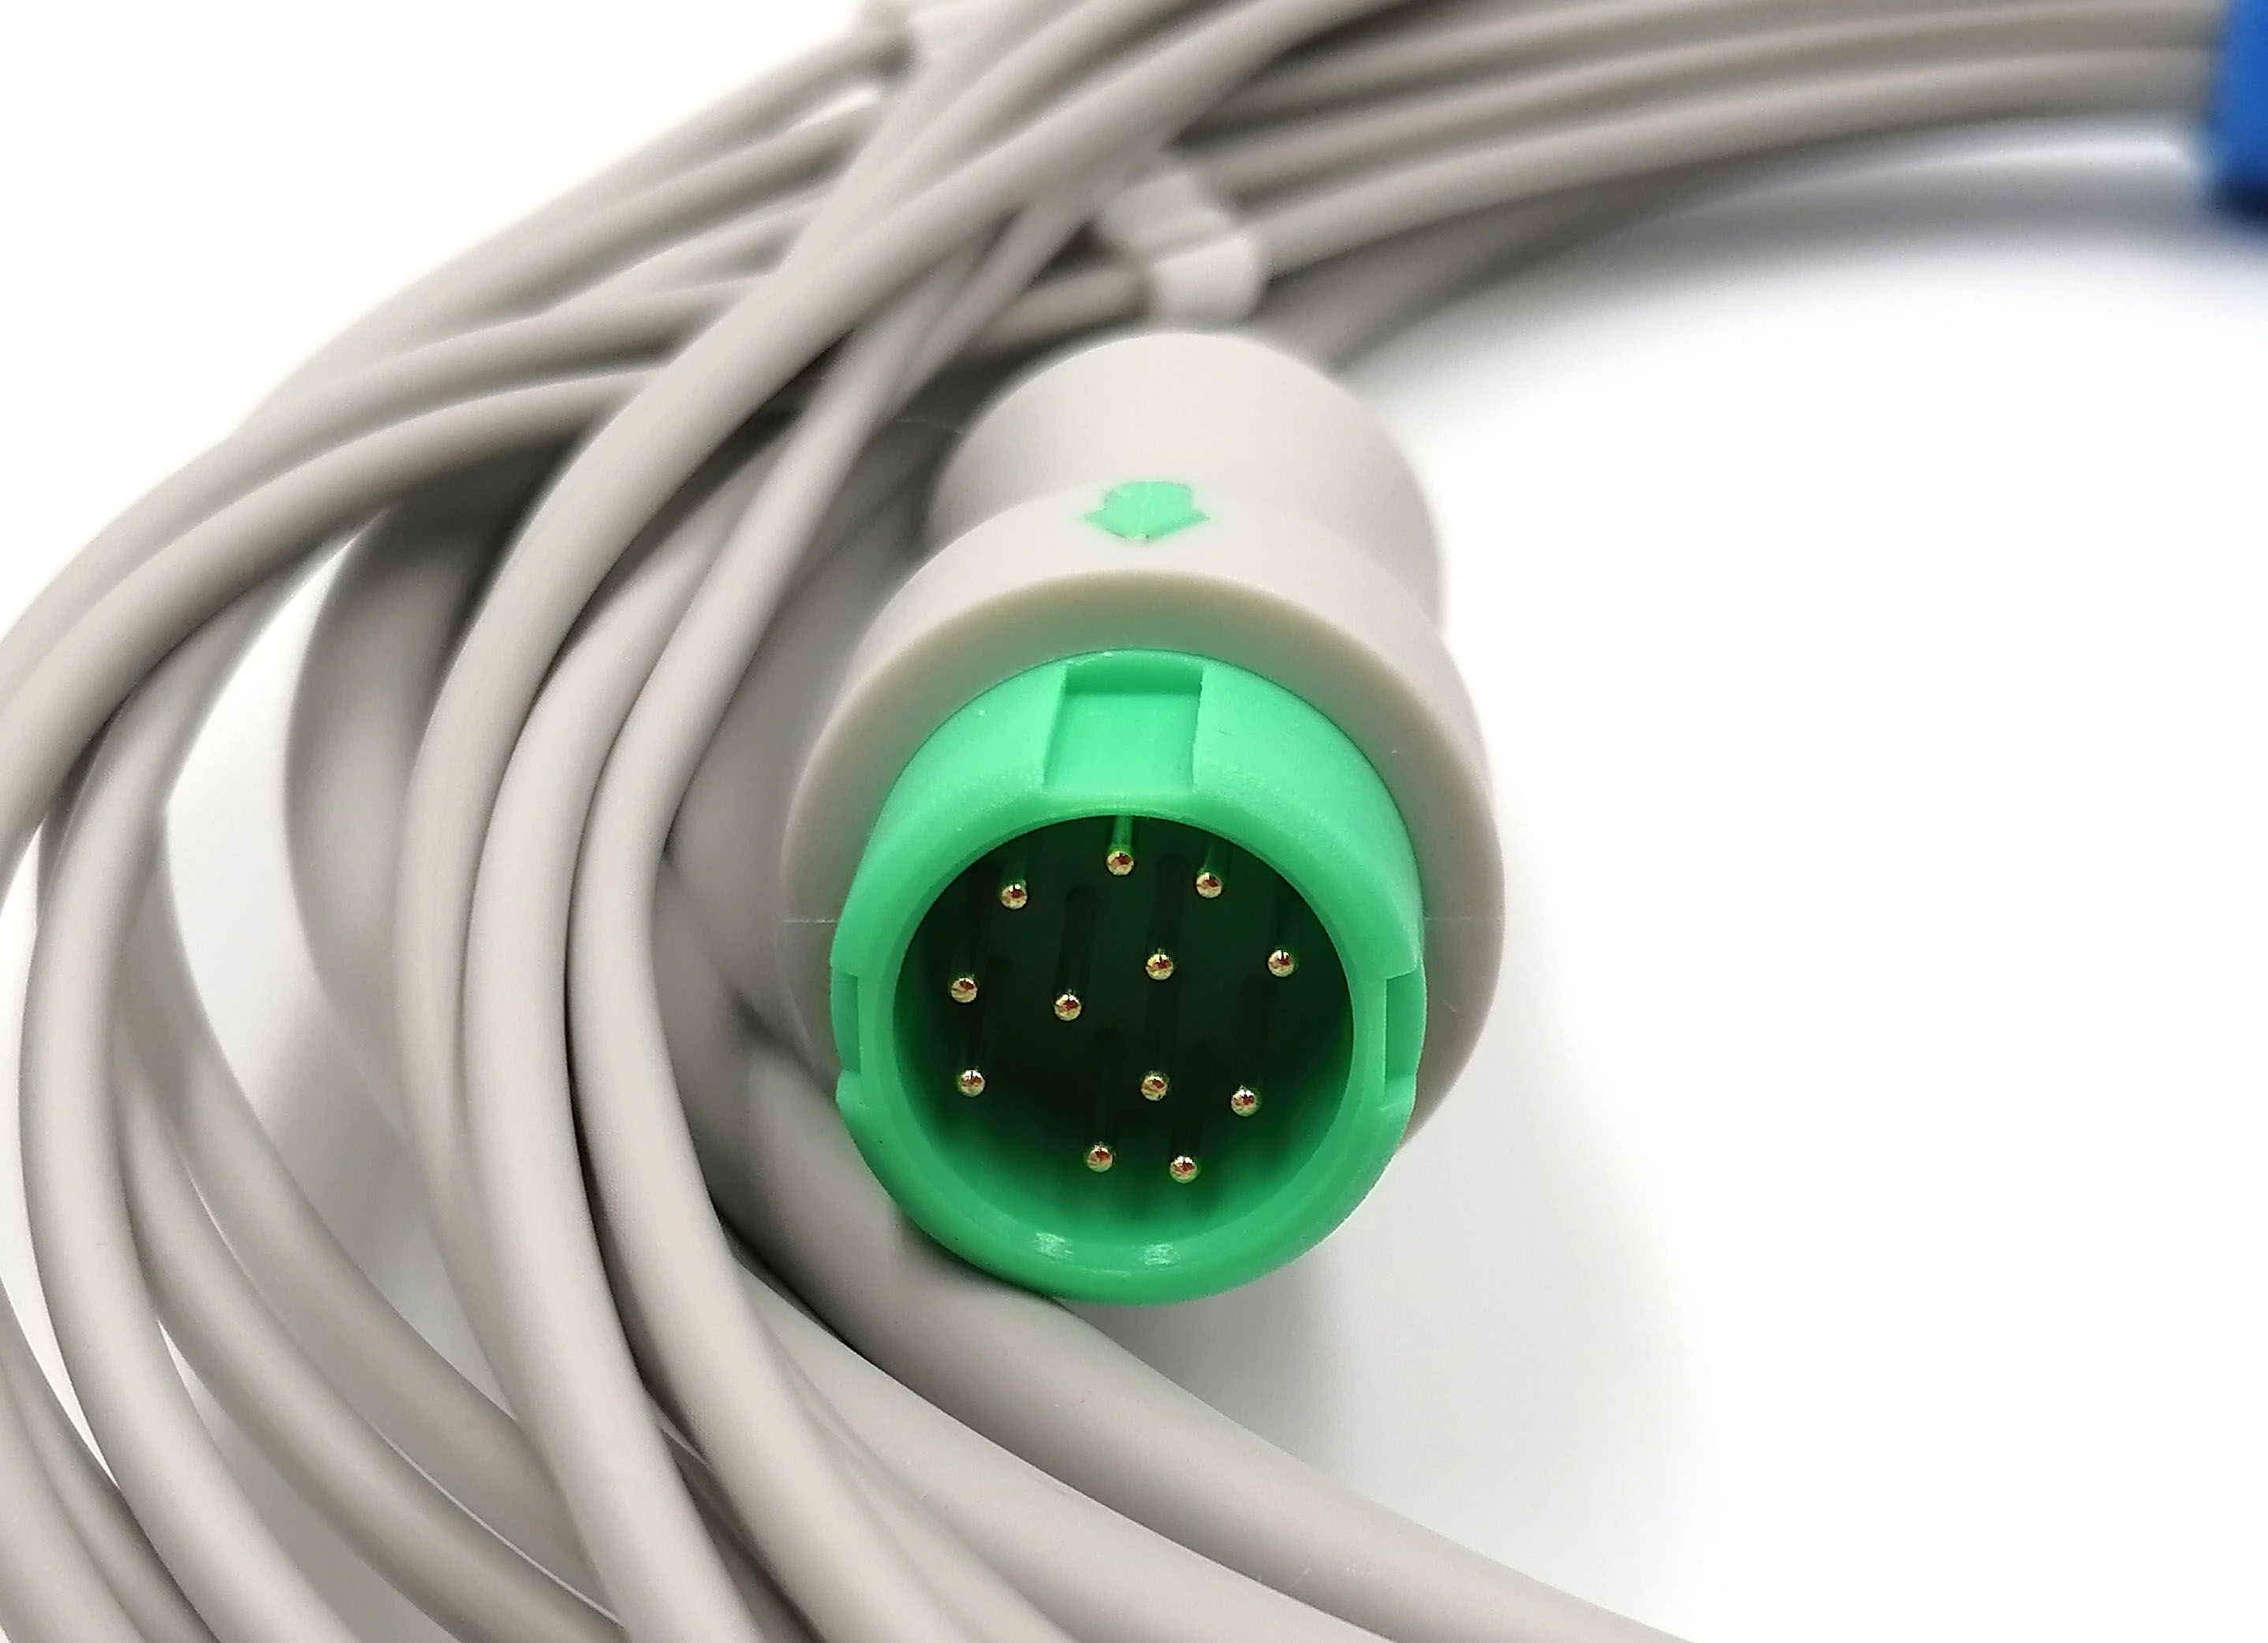 Цельный ЭКГ кабель пациента для Mindray BeneView T1, T5, T6, T8, T9, iMEC 10, DPM6, DPM7, Beneheart D3, D6, iPM-9800, iPM 8, iPM 10, iPM 12, 0010-30-42721, разъем 12Pins, 5 отведений, кнопки Snap